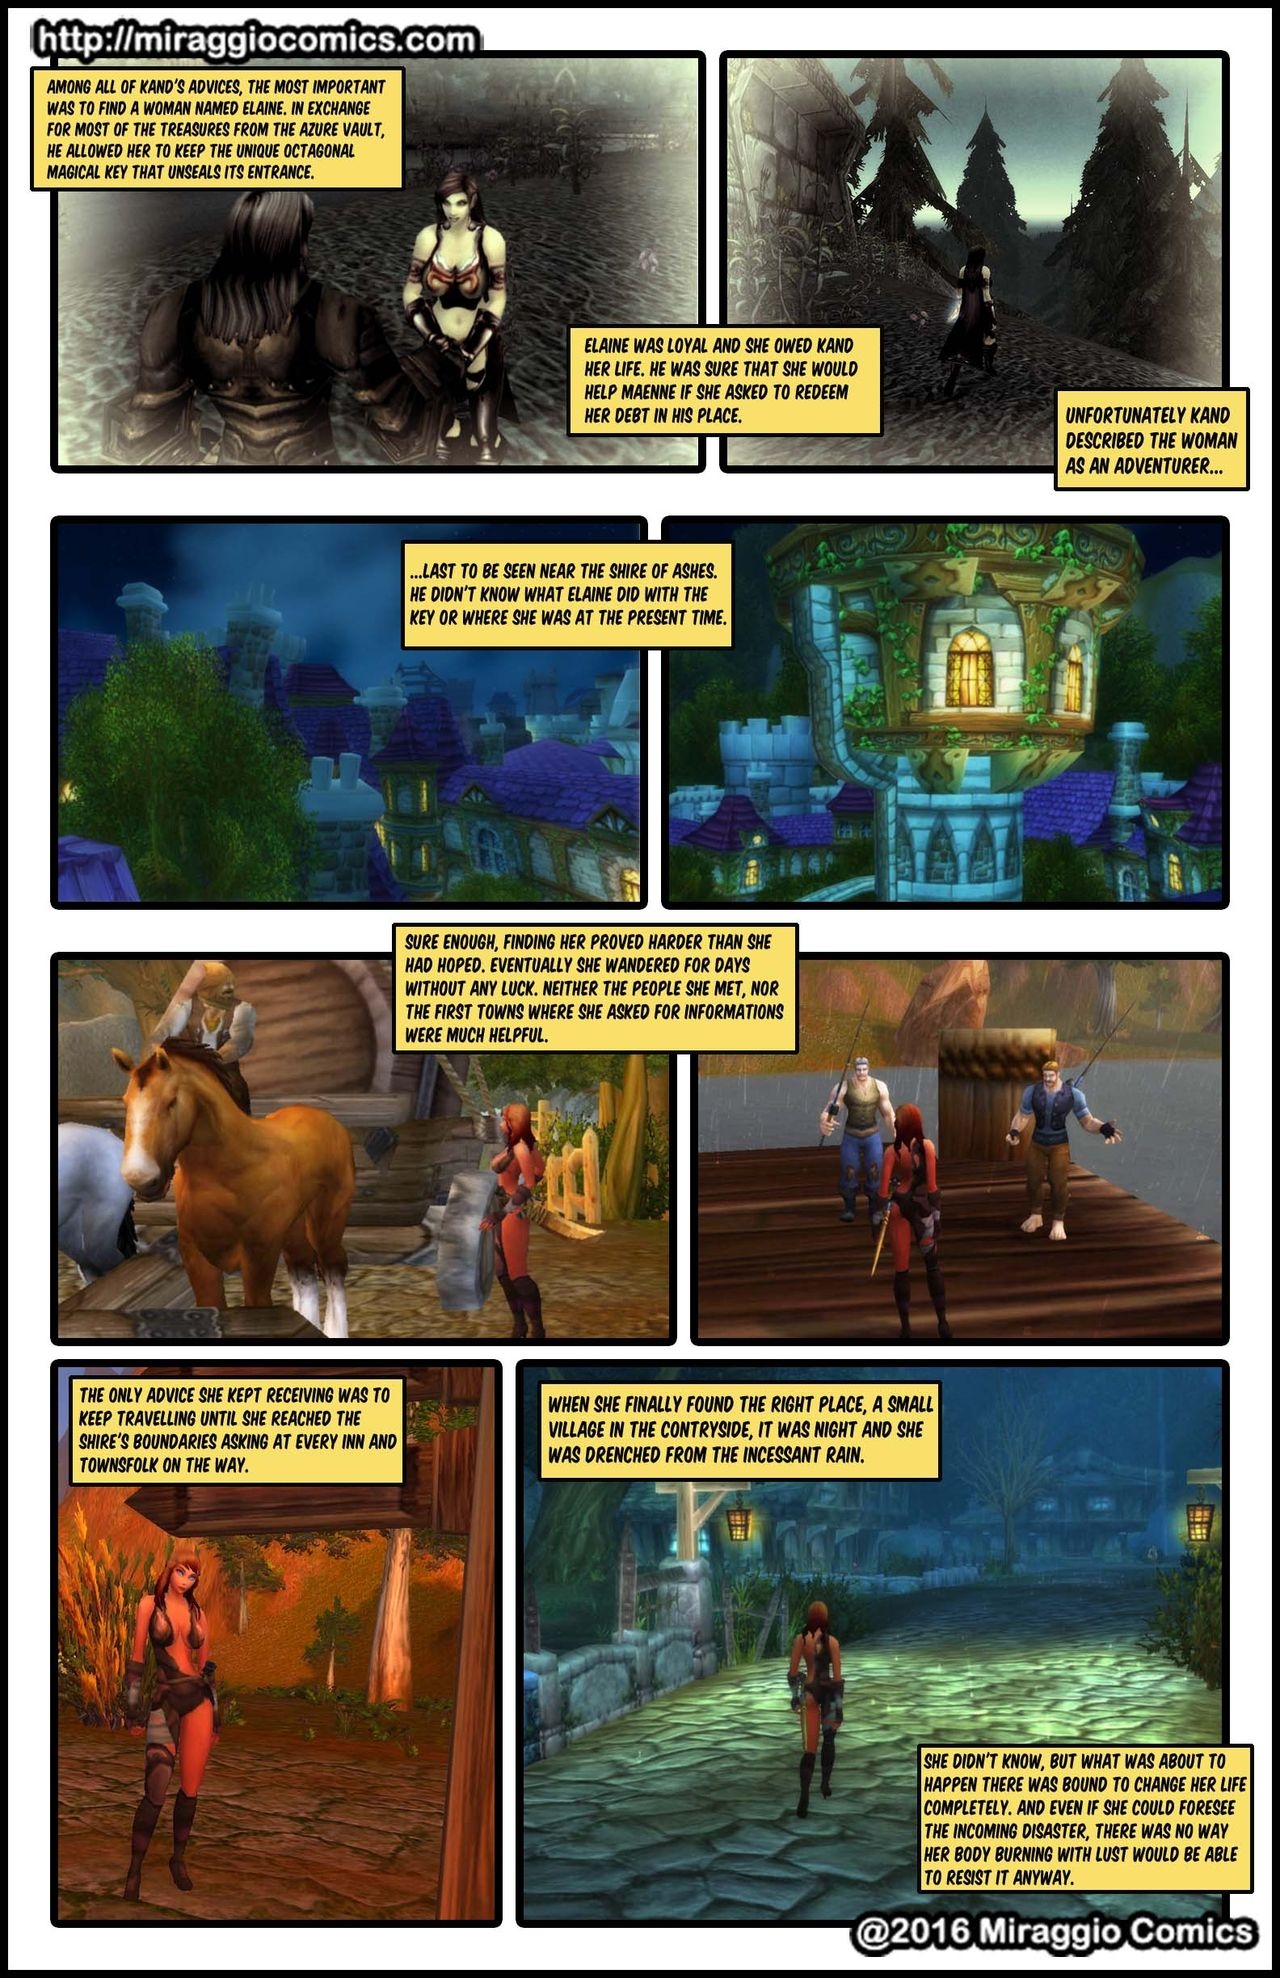 [MiraggioComics]Garnet’s Journey [Warcraft Nostalgia] 7